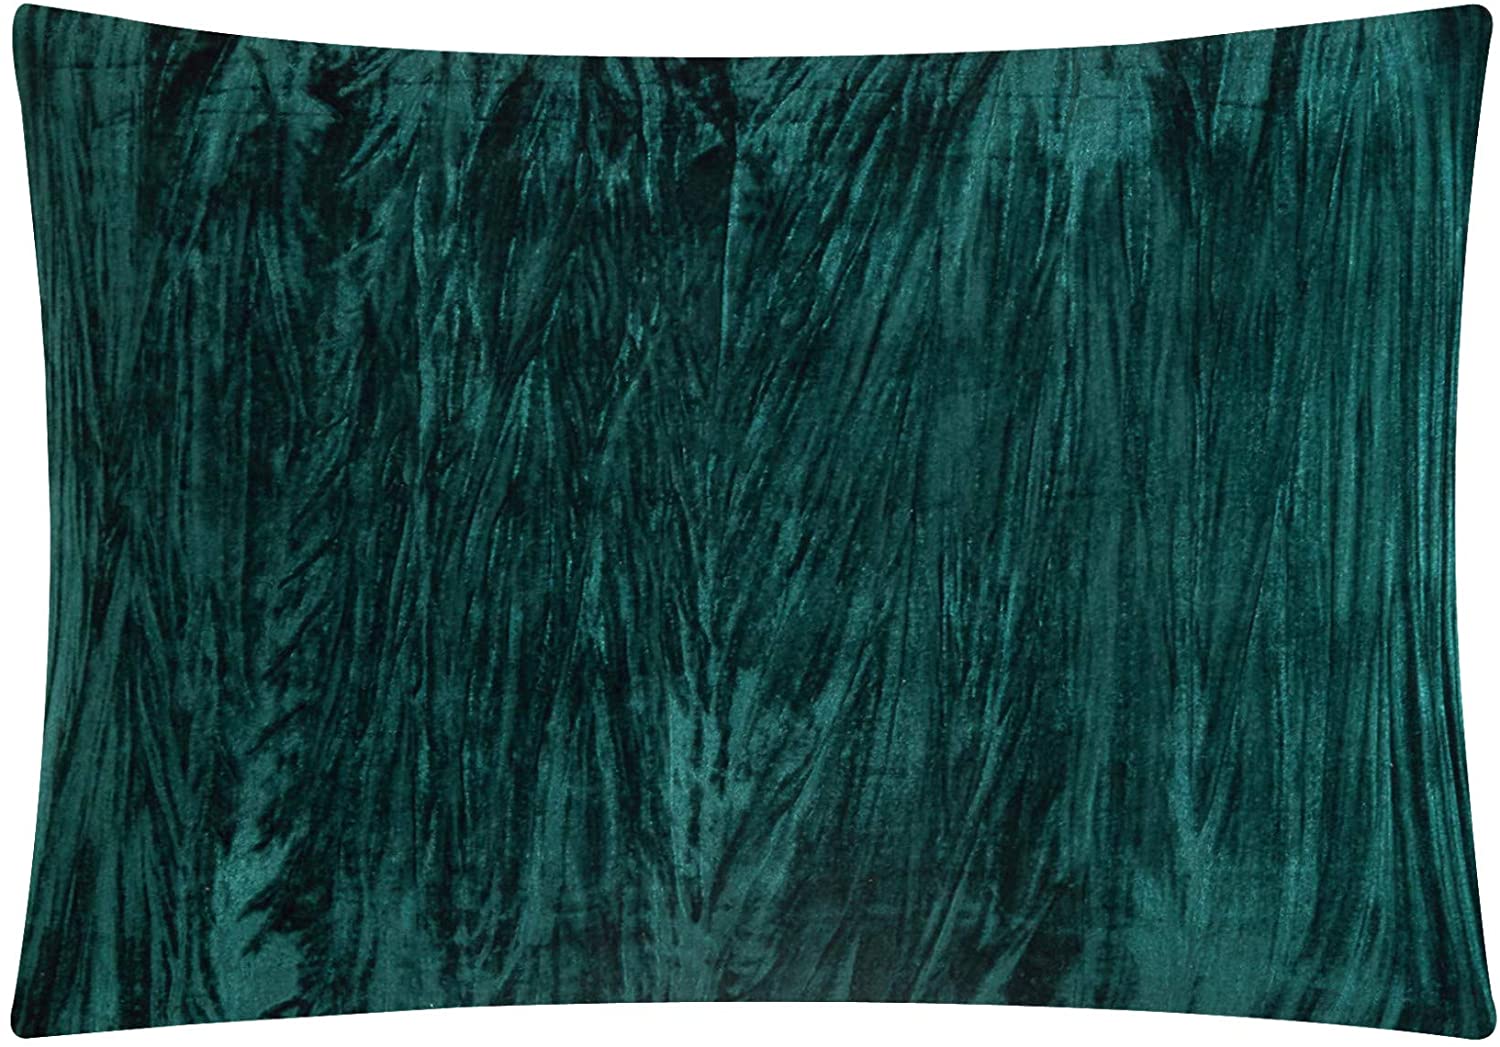 Decora Details about   Chic Home Westmont 4 Piece Comforter Set Crinkle Crushed Velvet Bedding 